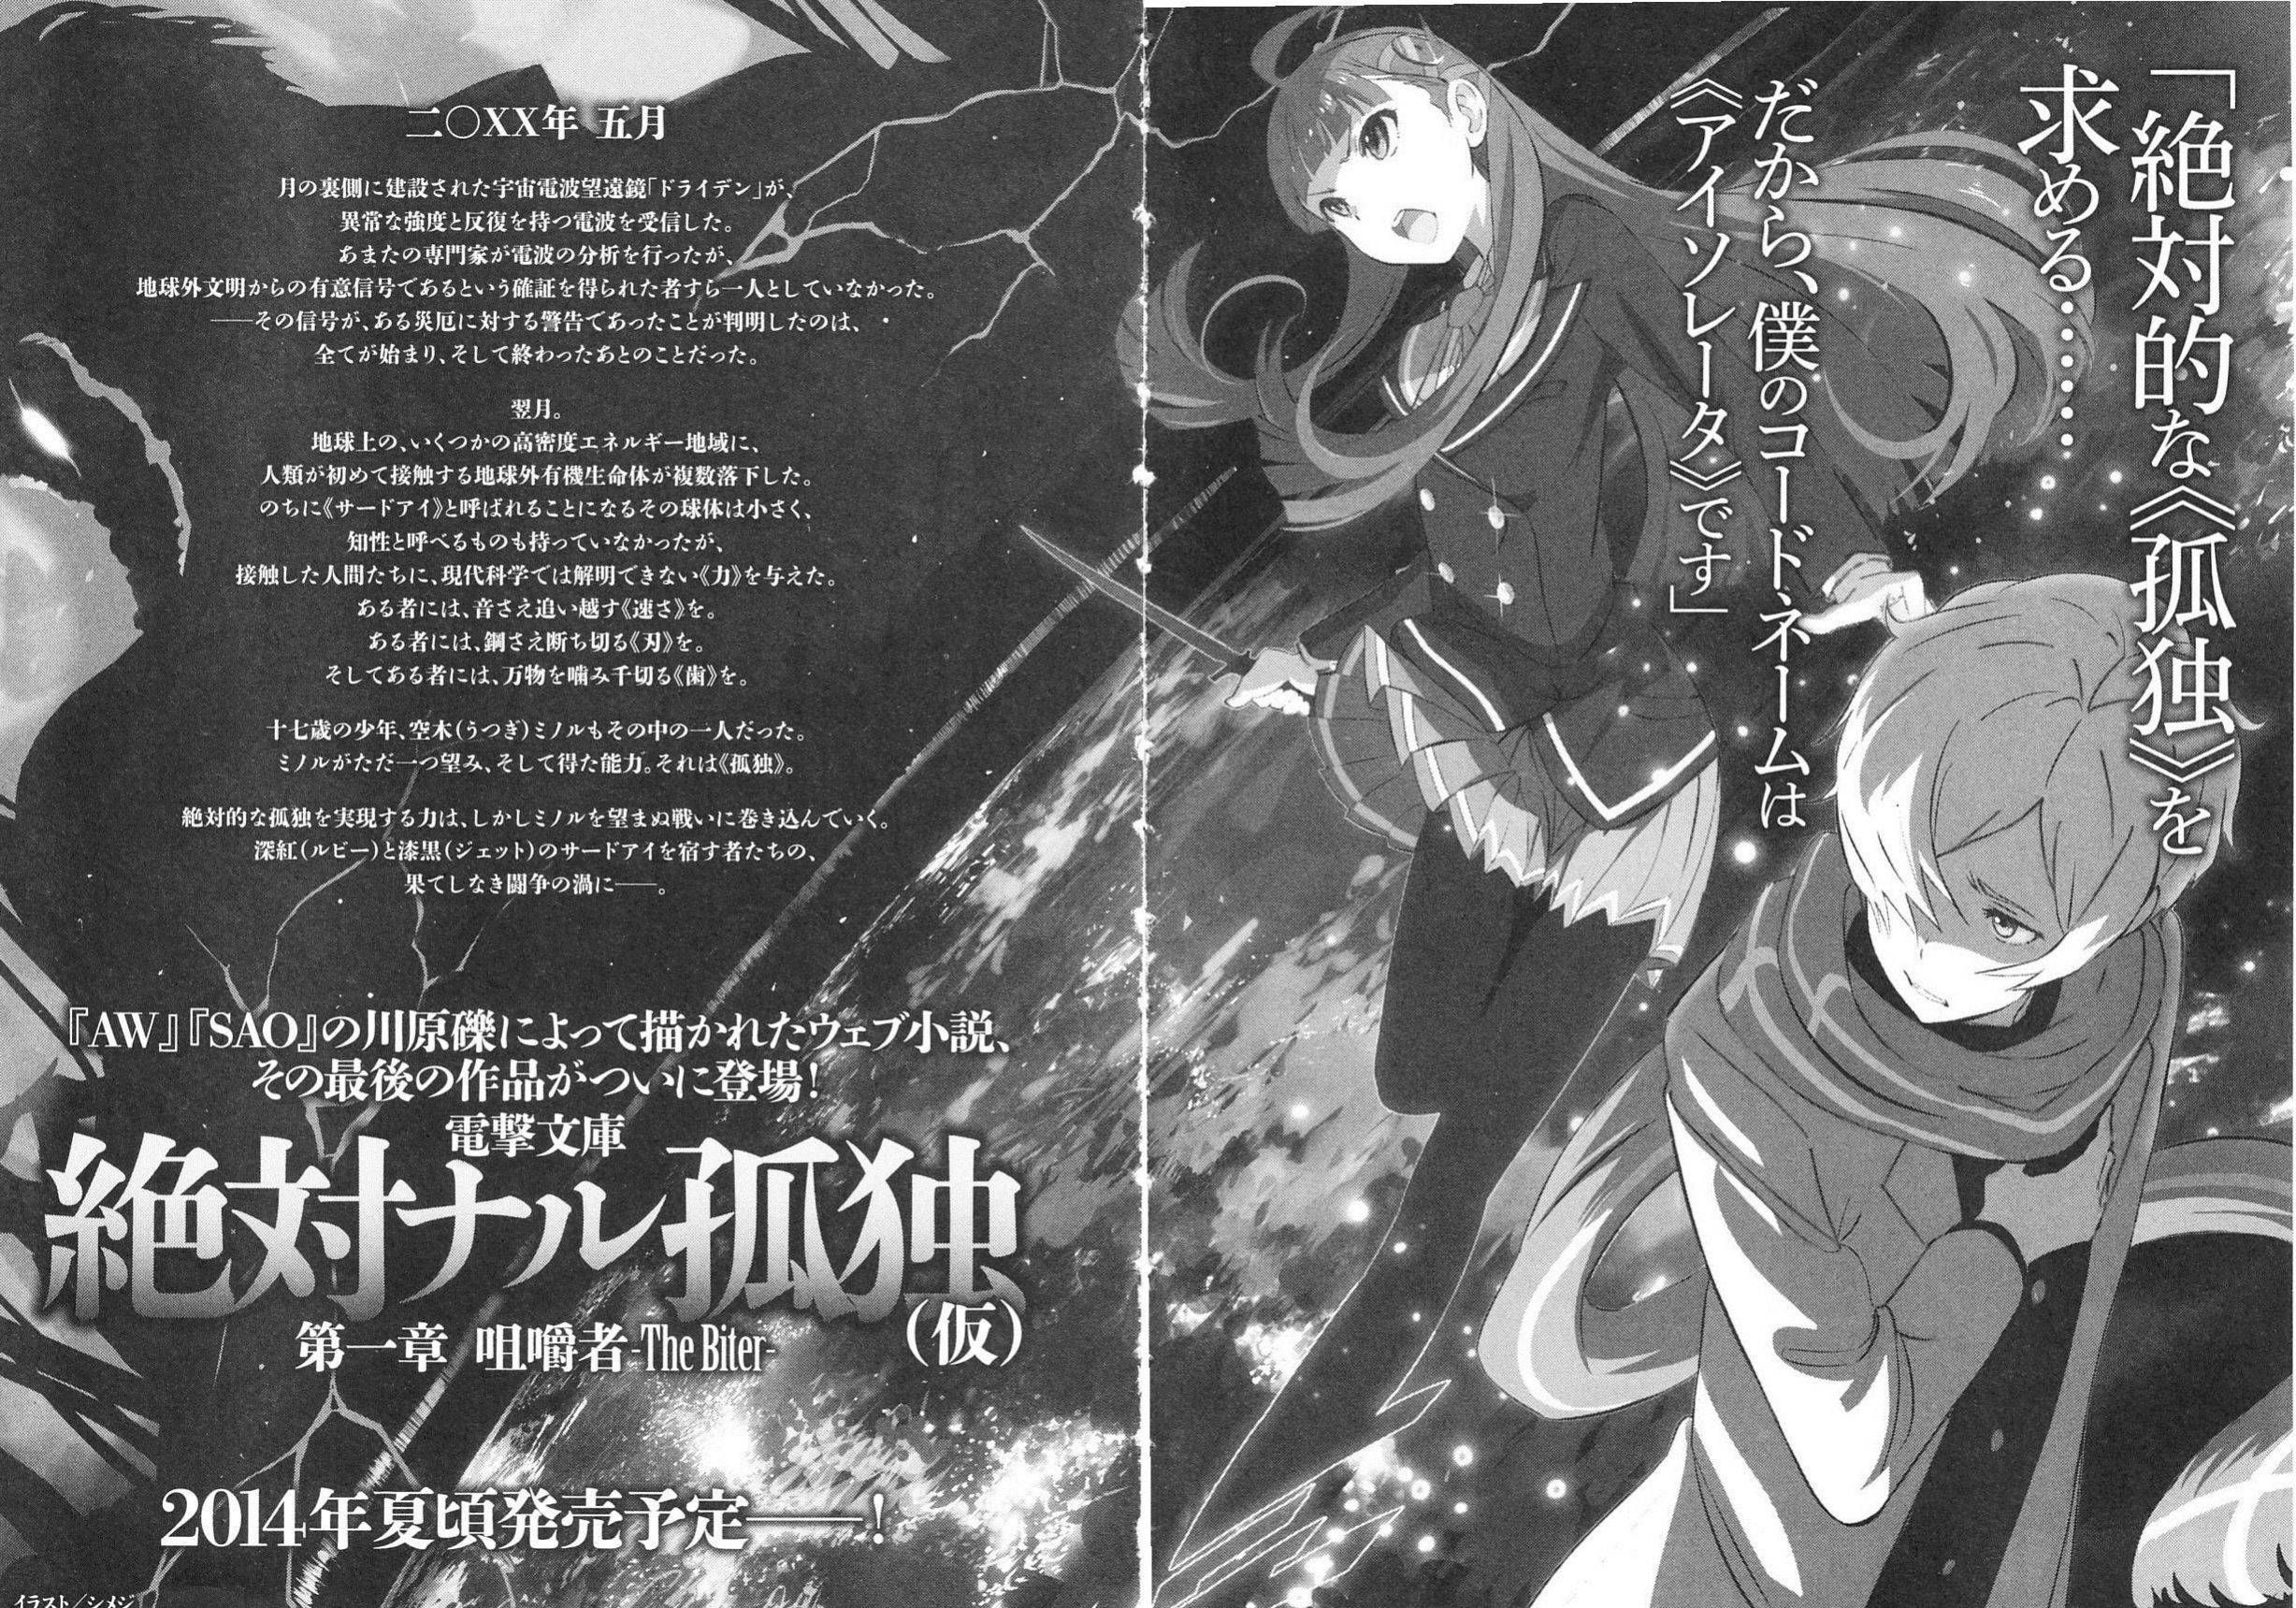 Reki Kawaharas Zettai Naru Kodoku (Absolute Solitude) Light Novel Launches in June image 3